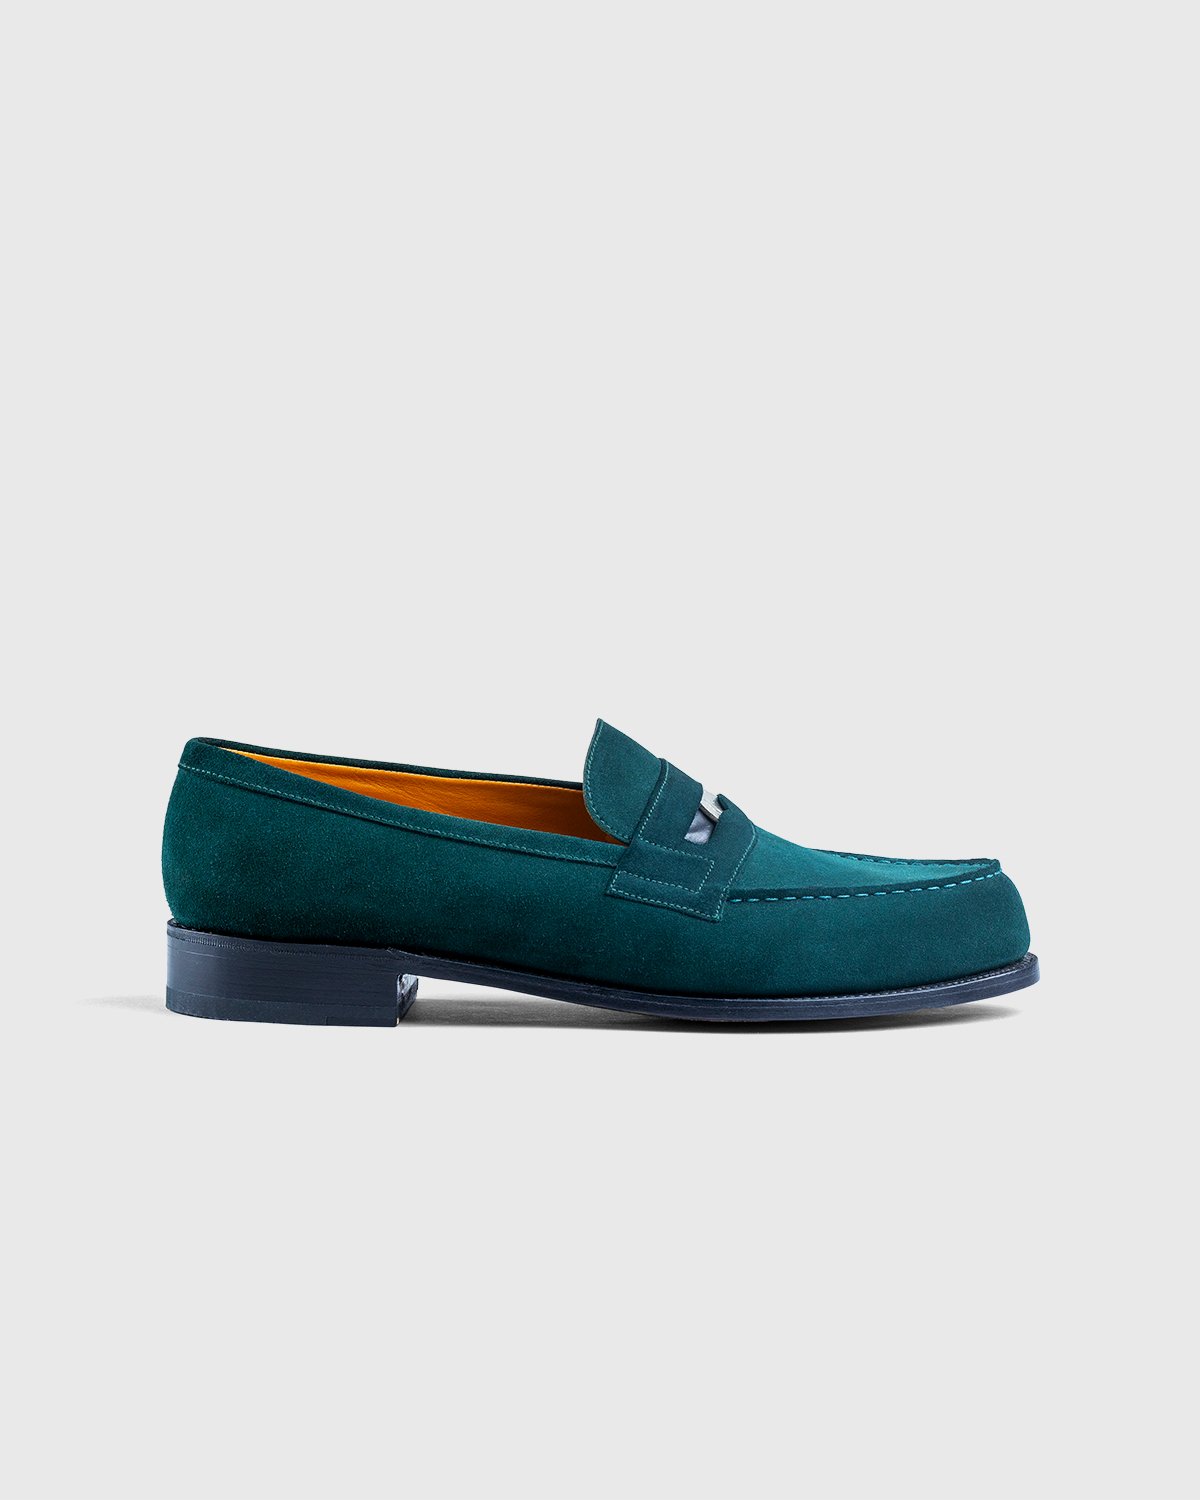 J.M. Weston x Highsnobiety - 180 'Penny' Loafer - Footwear - Green - Image 1